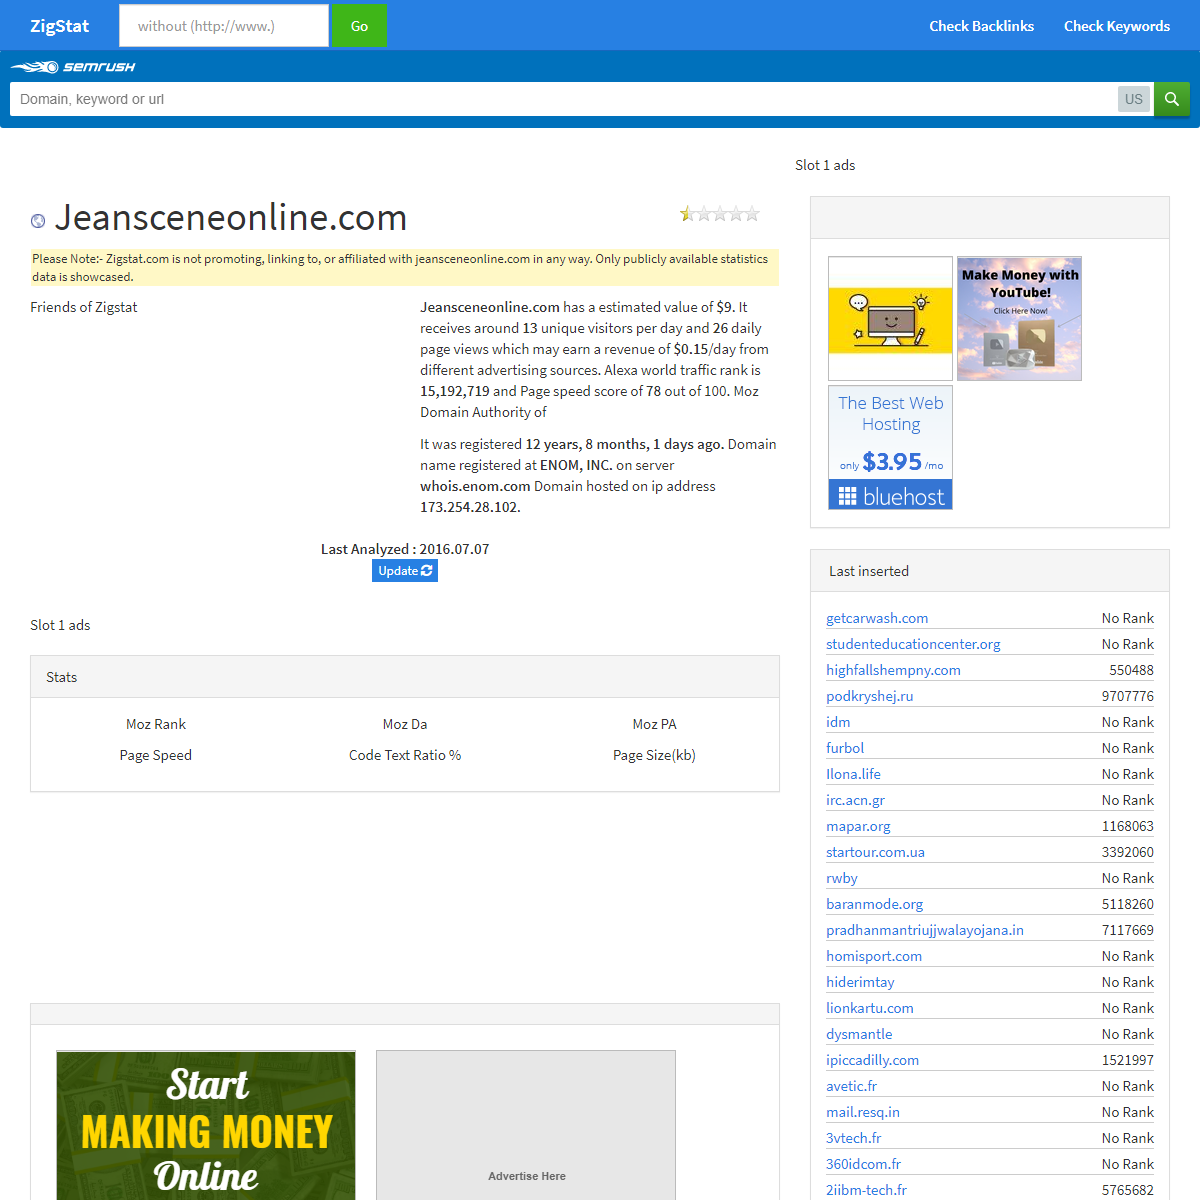 A complete backup of http://jeansceneonline.com.zigstat.com/